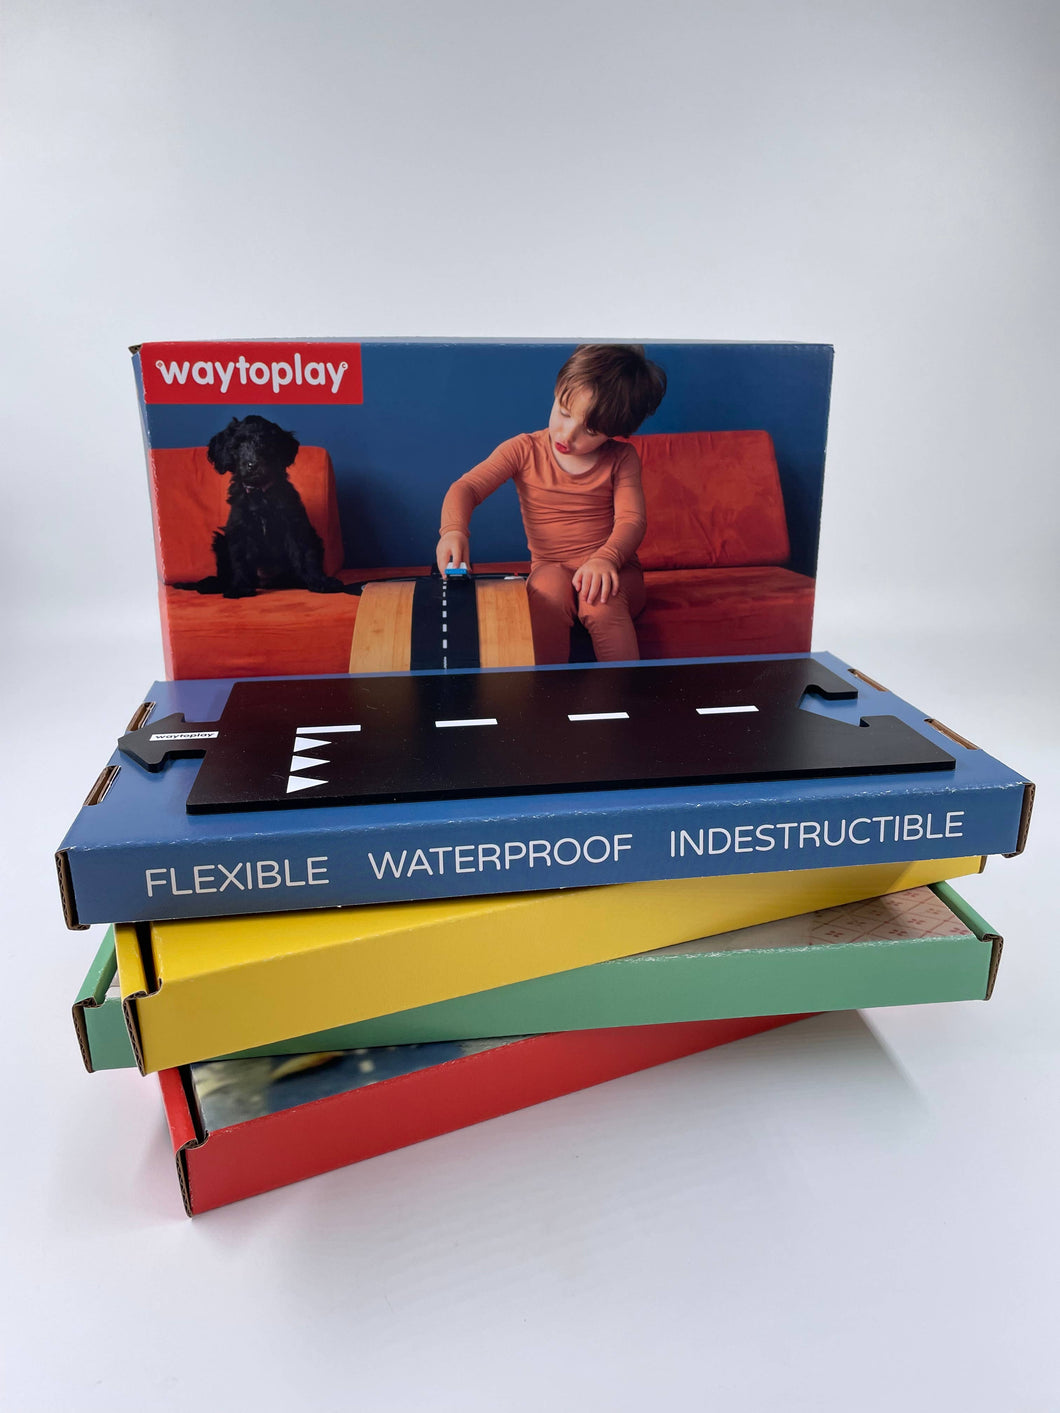 Waytoplay Toys - USA - Flexible Toy Road - Counter Display & Demo Kit